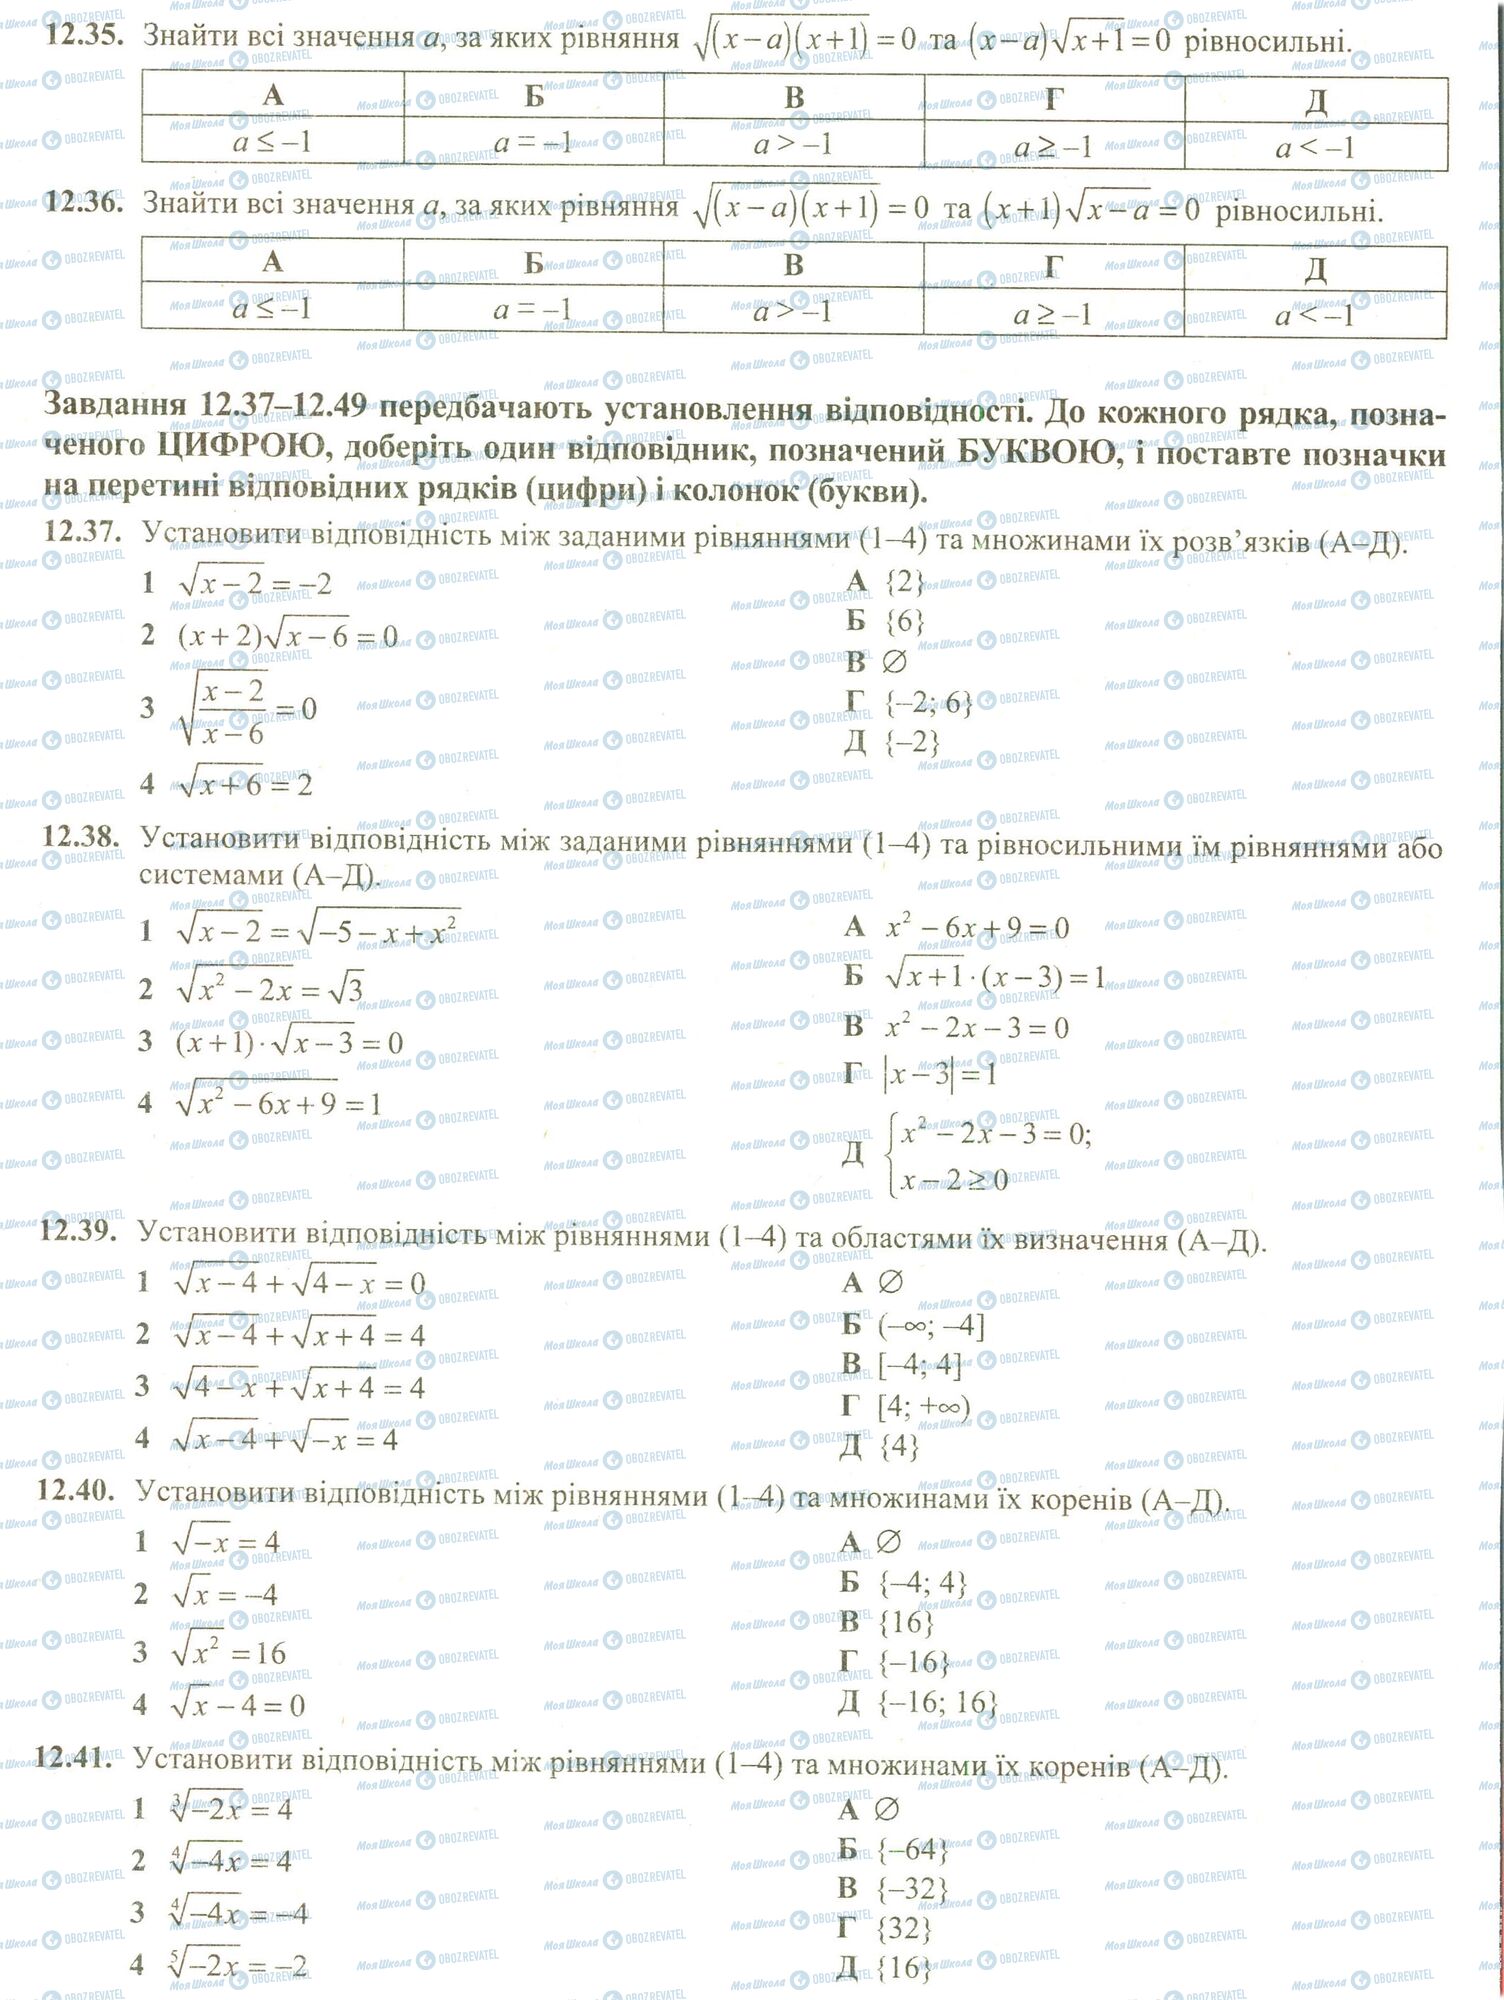 ЗНО Математика 11 класс страница 35-41